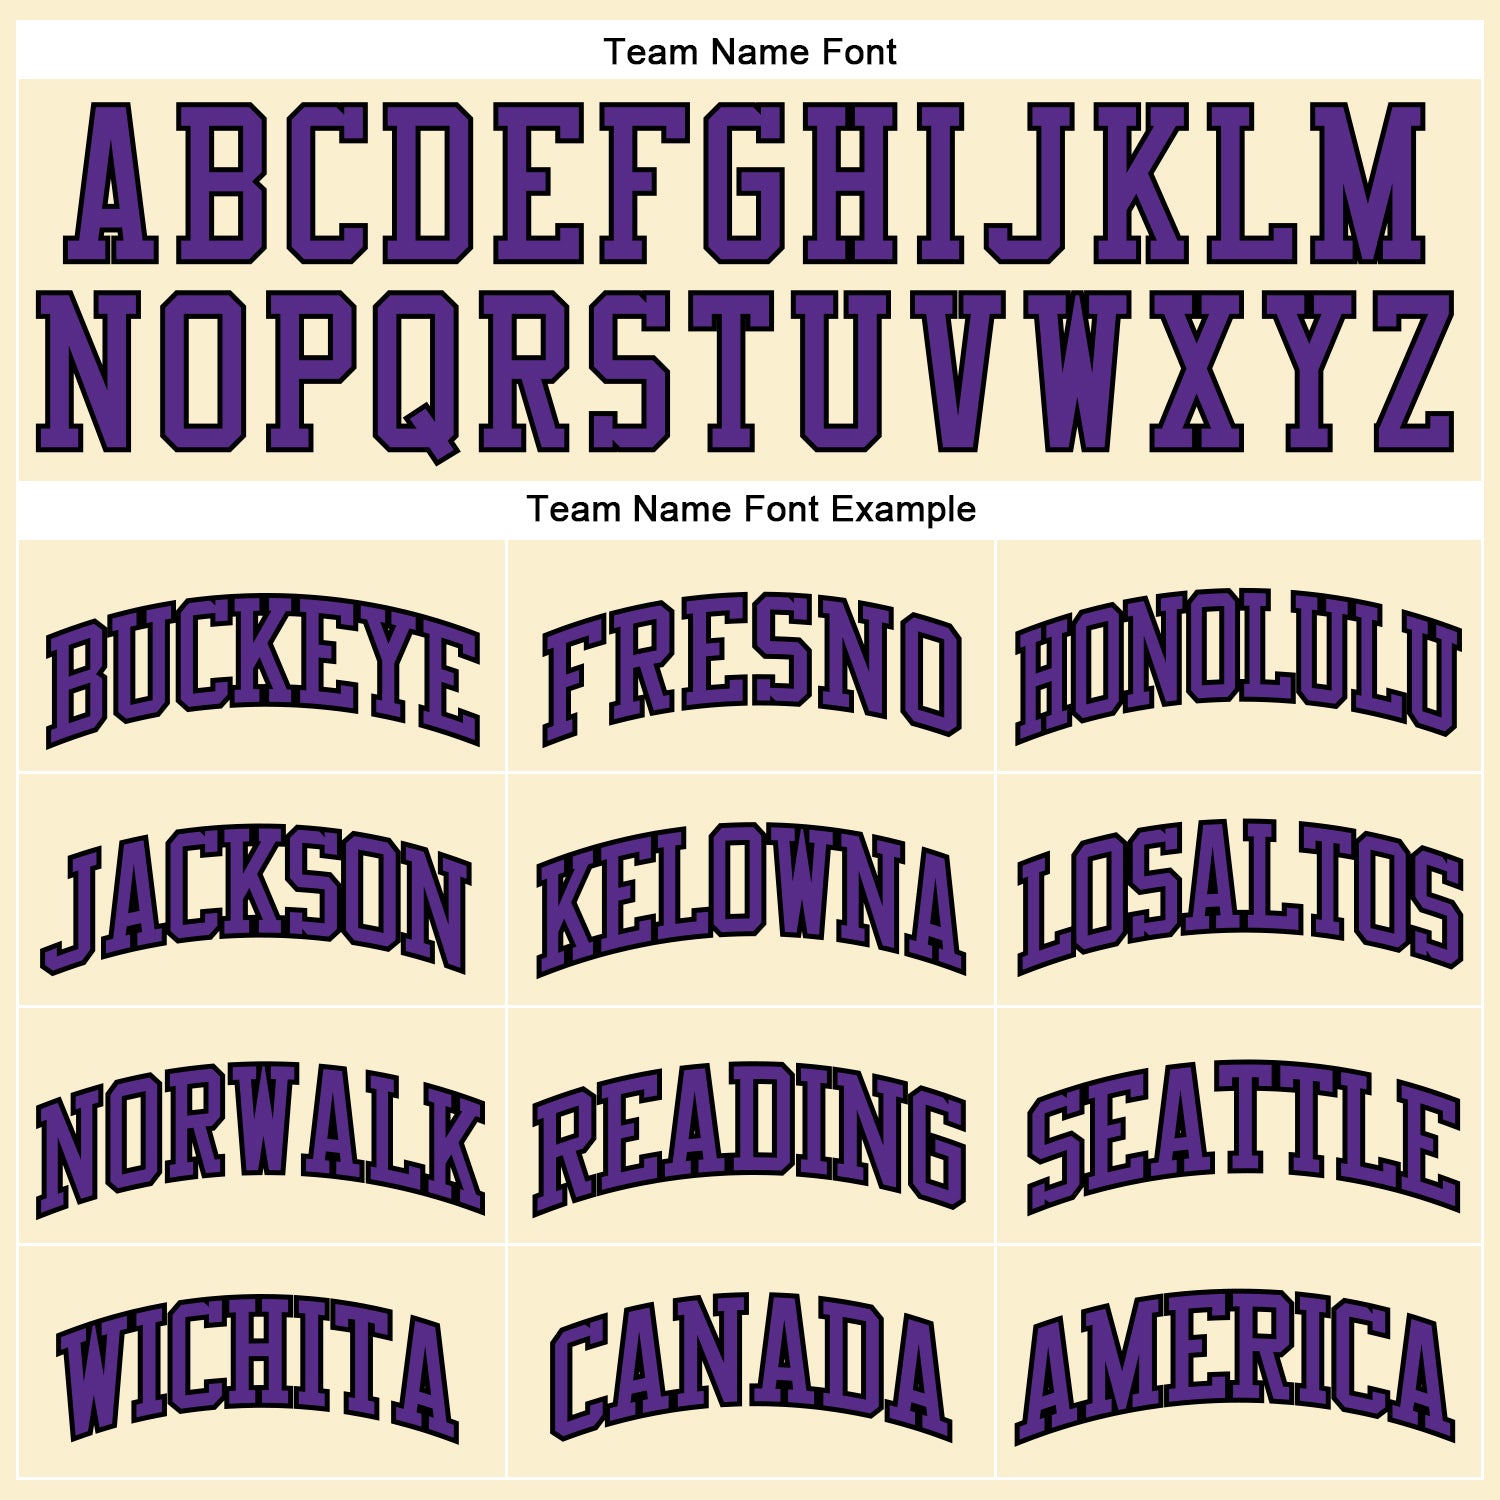 Black-Purple Custom Basketball Jersey – The Jersey Nation